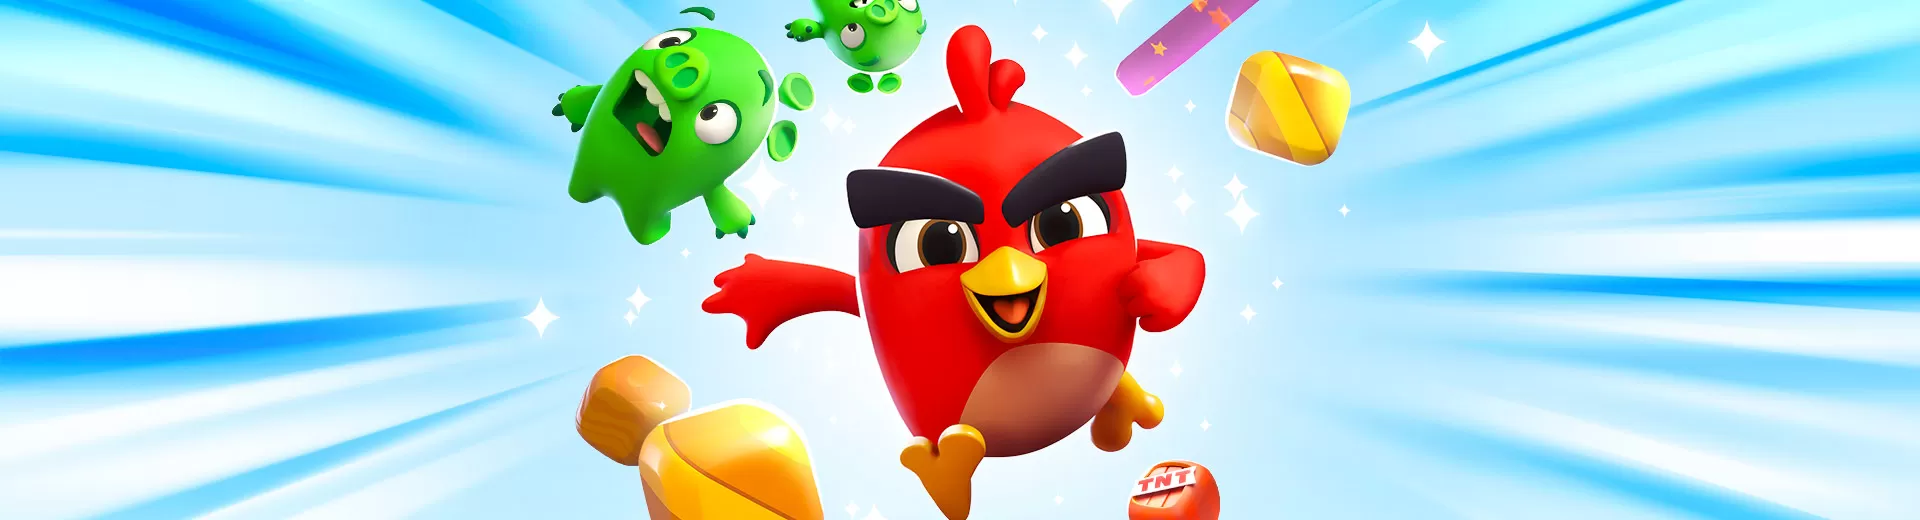 Angry Birds Journey Emulator Pc